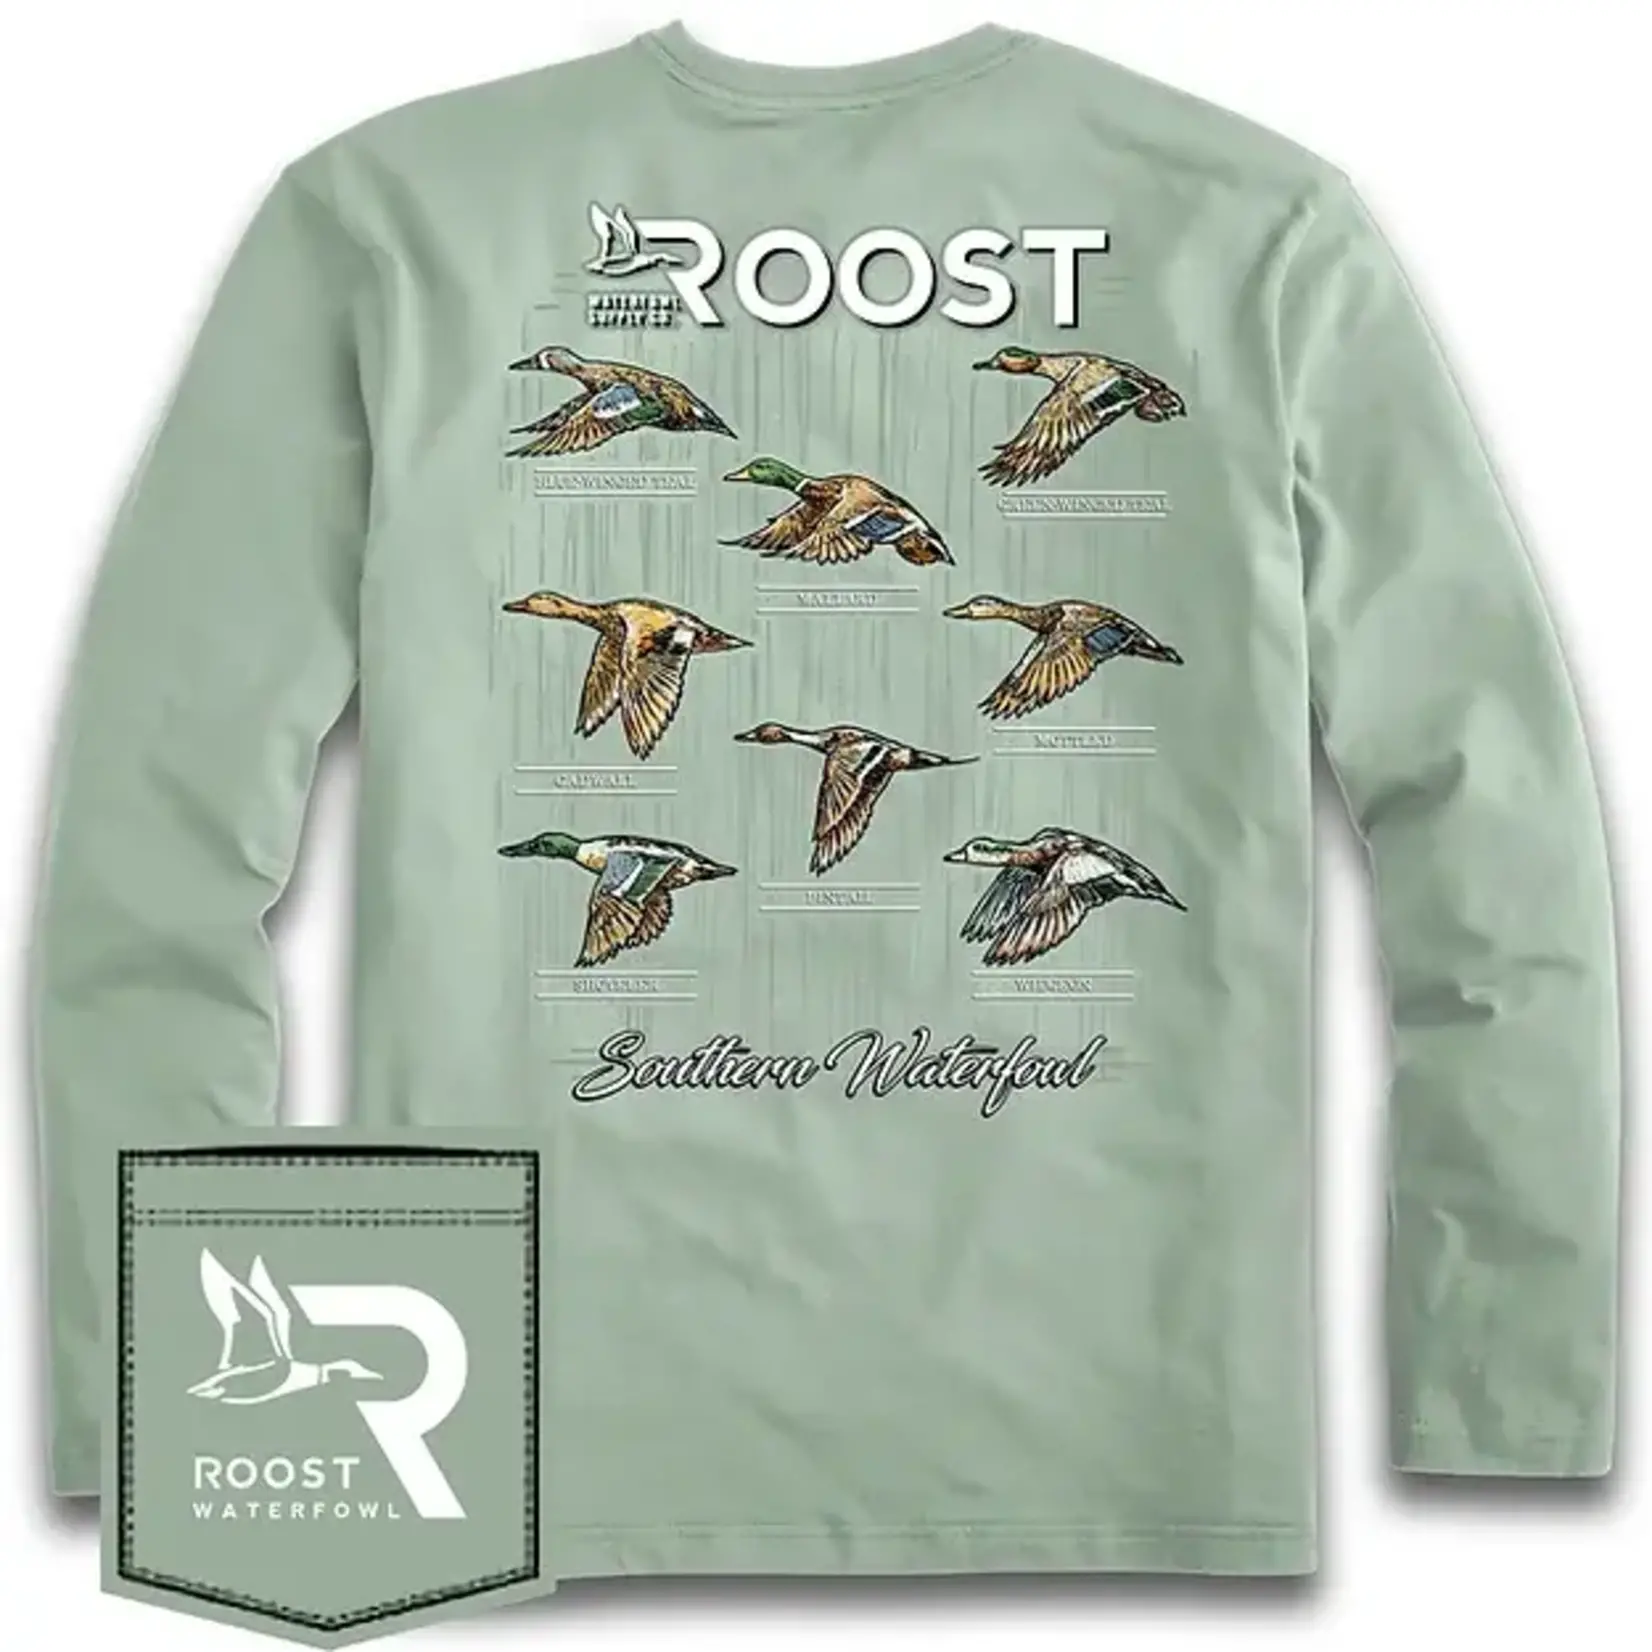 Roost Waterfowl Roost Waterfowl Men's Southern Waterfowl L/S TEE Shirt